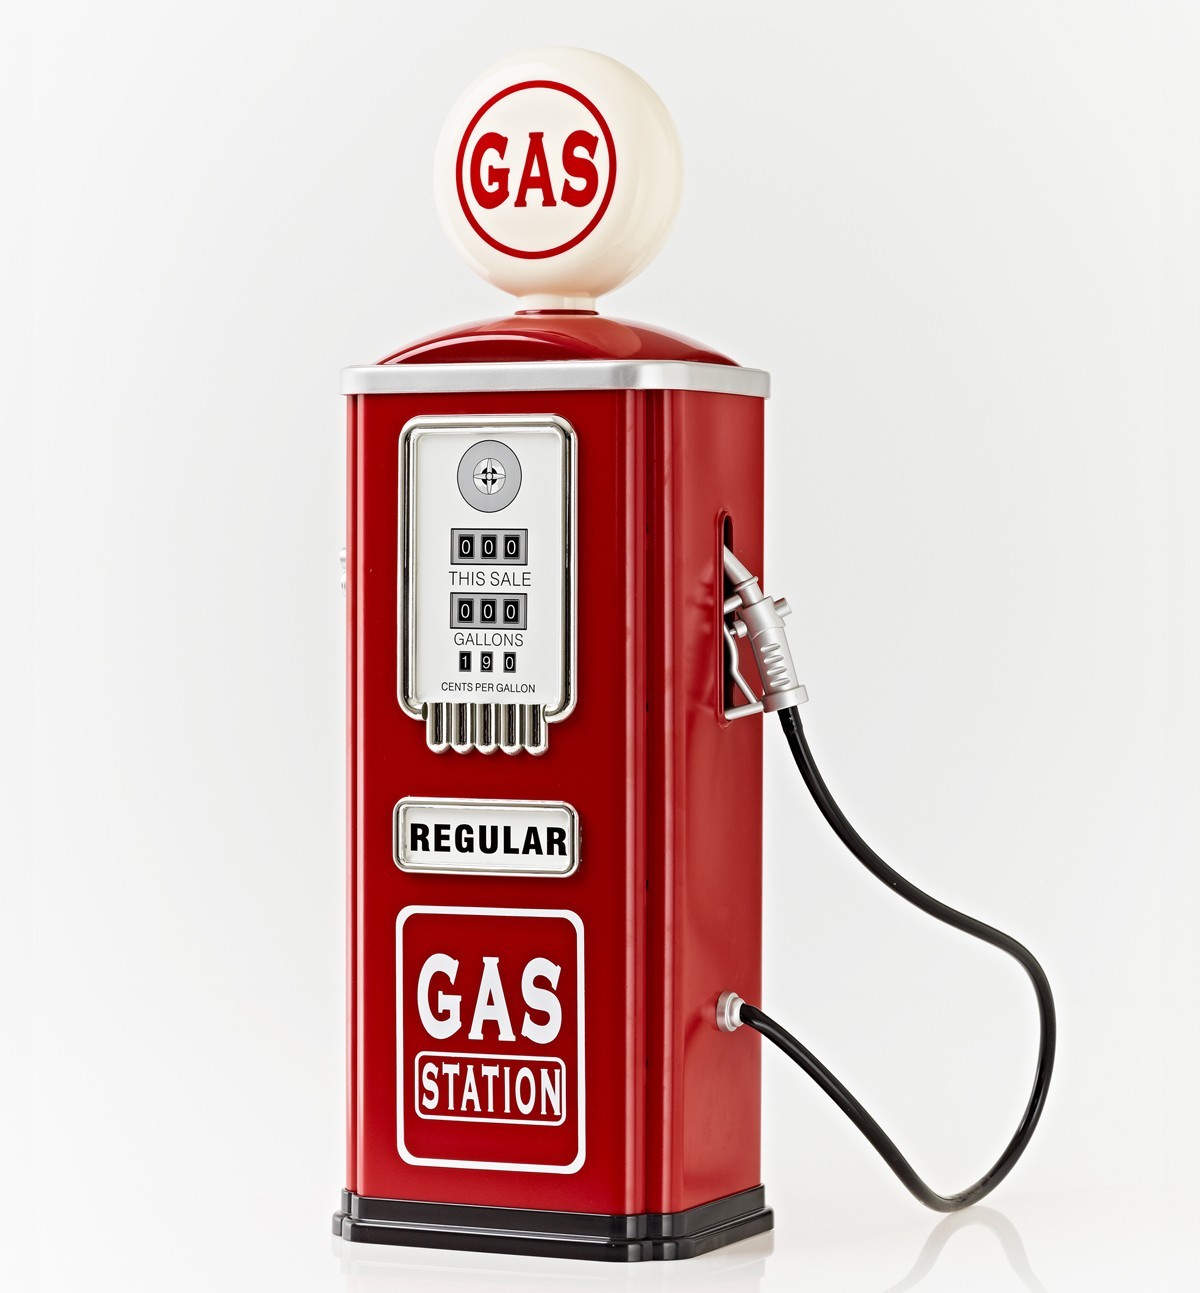 Free Gas Pump Image, Download Free Gas Pump Image png images, Free